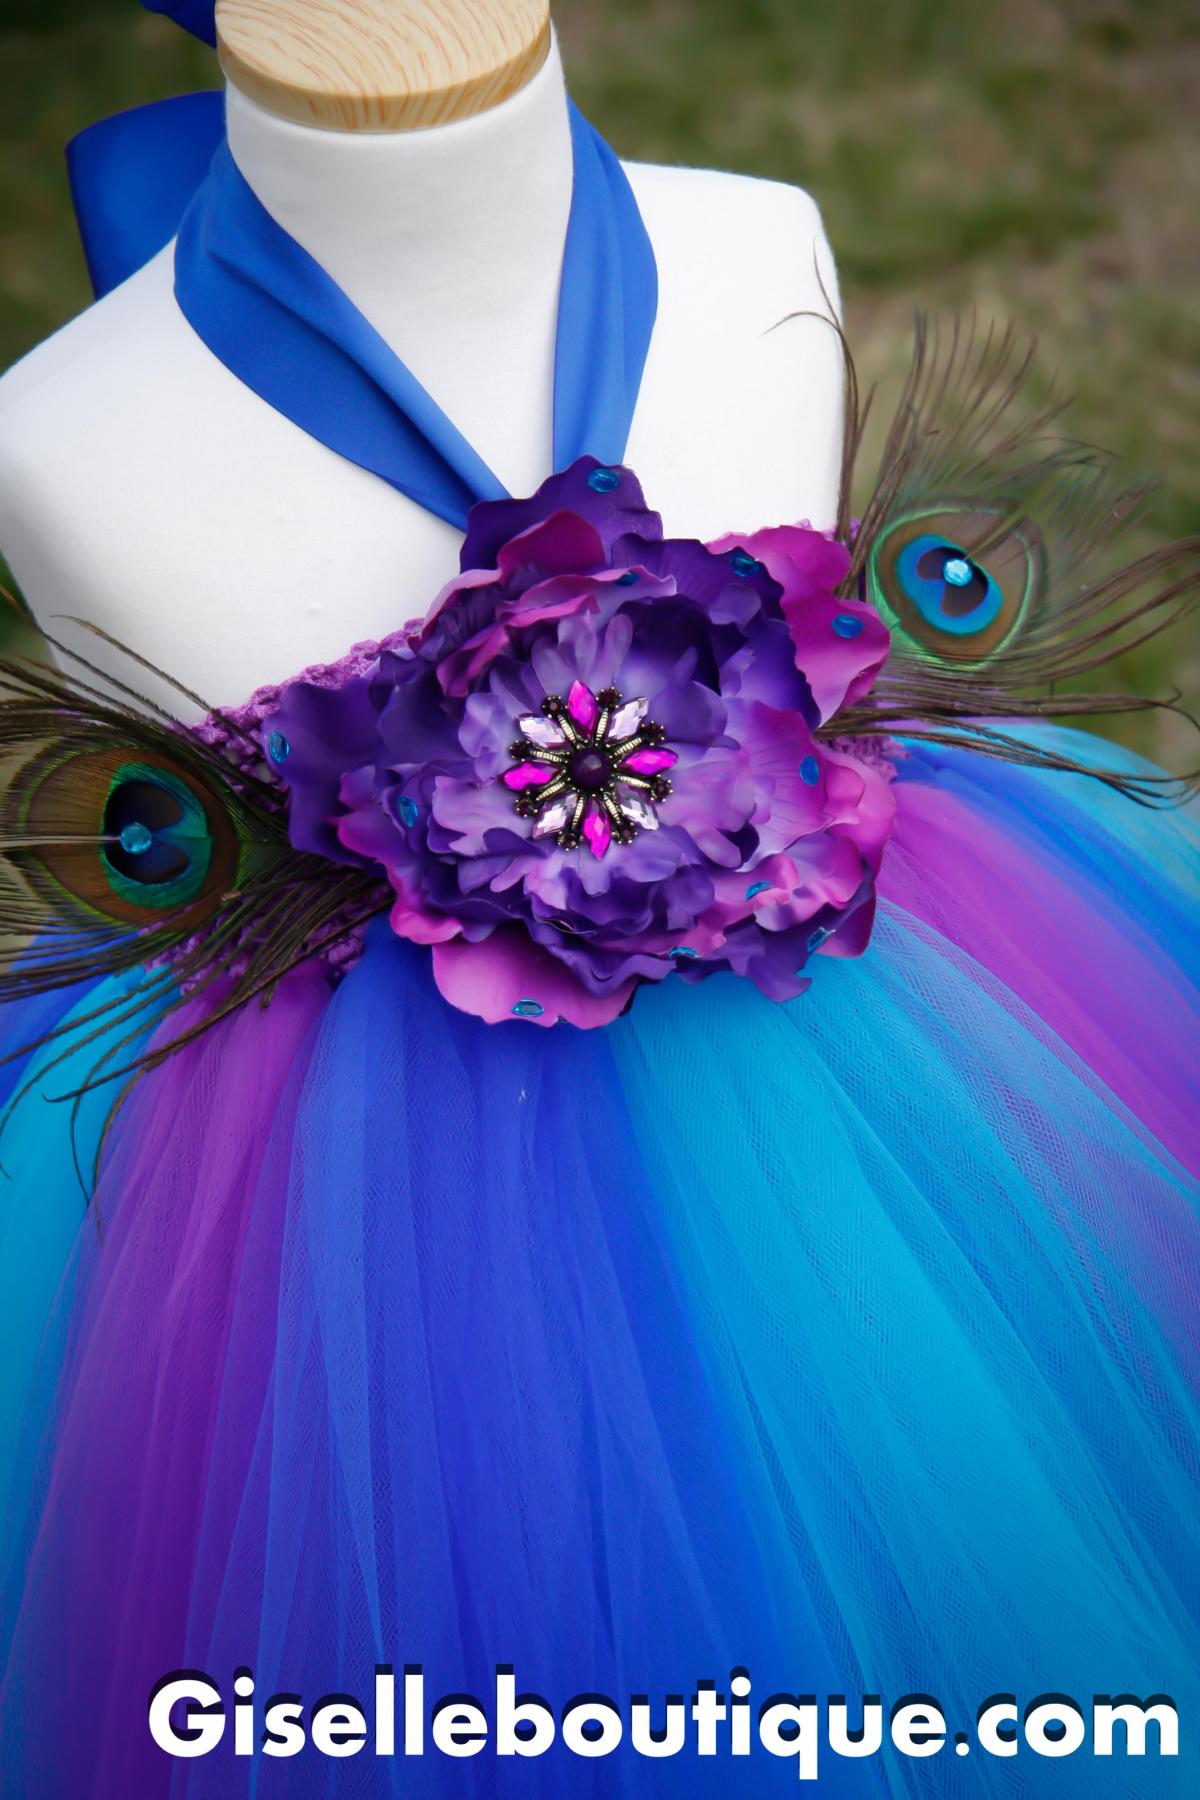 Flower Girl Dress. Peacock Inspired Tutu Dress Series Ii , Baby Tutu Dress, Toddler Tutu Dress, Wedding, Birthday, Newborn, 2t,3t,4t,5t